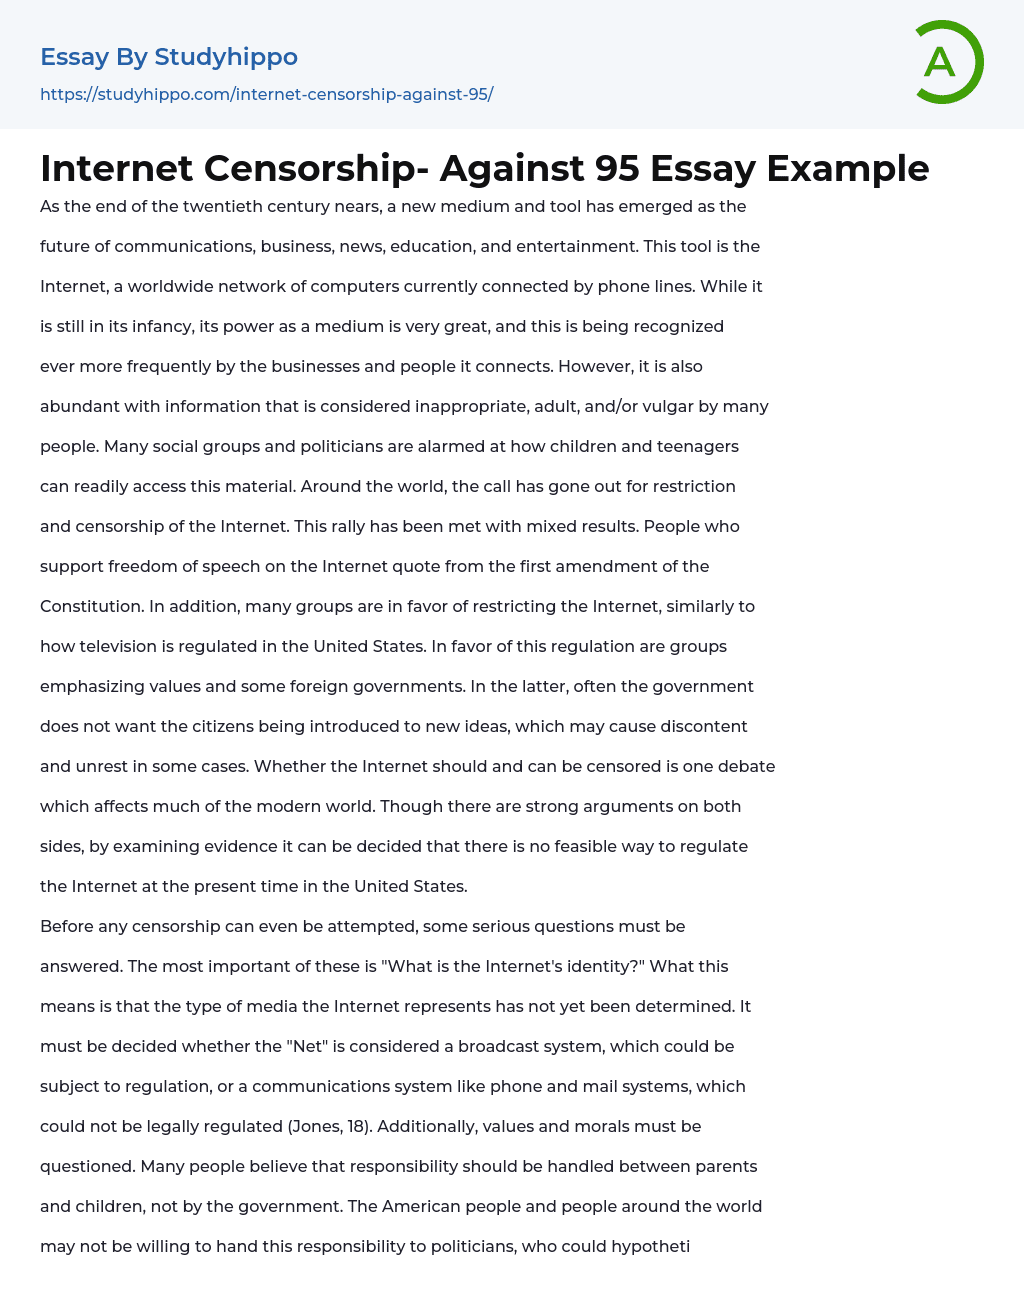 Internet Censorship- Against 95 Essay Example